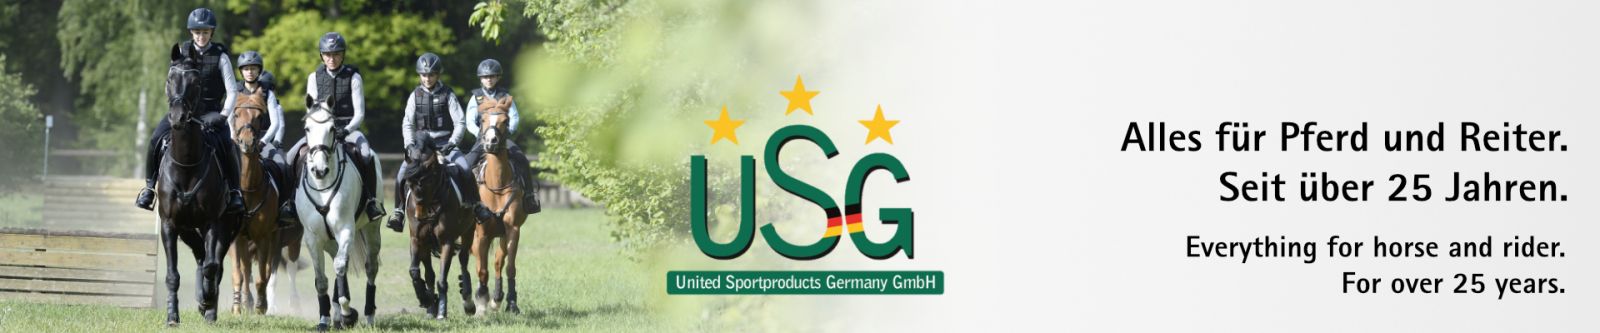 Privacy - USG - United Sportproducts Germany GmbH